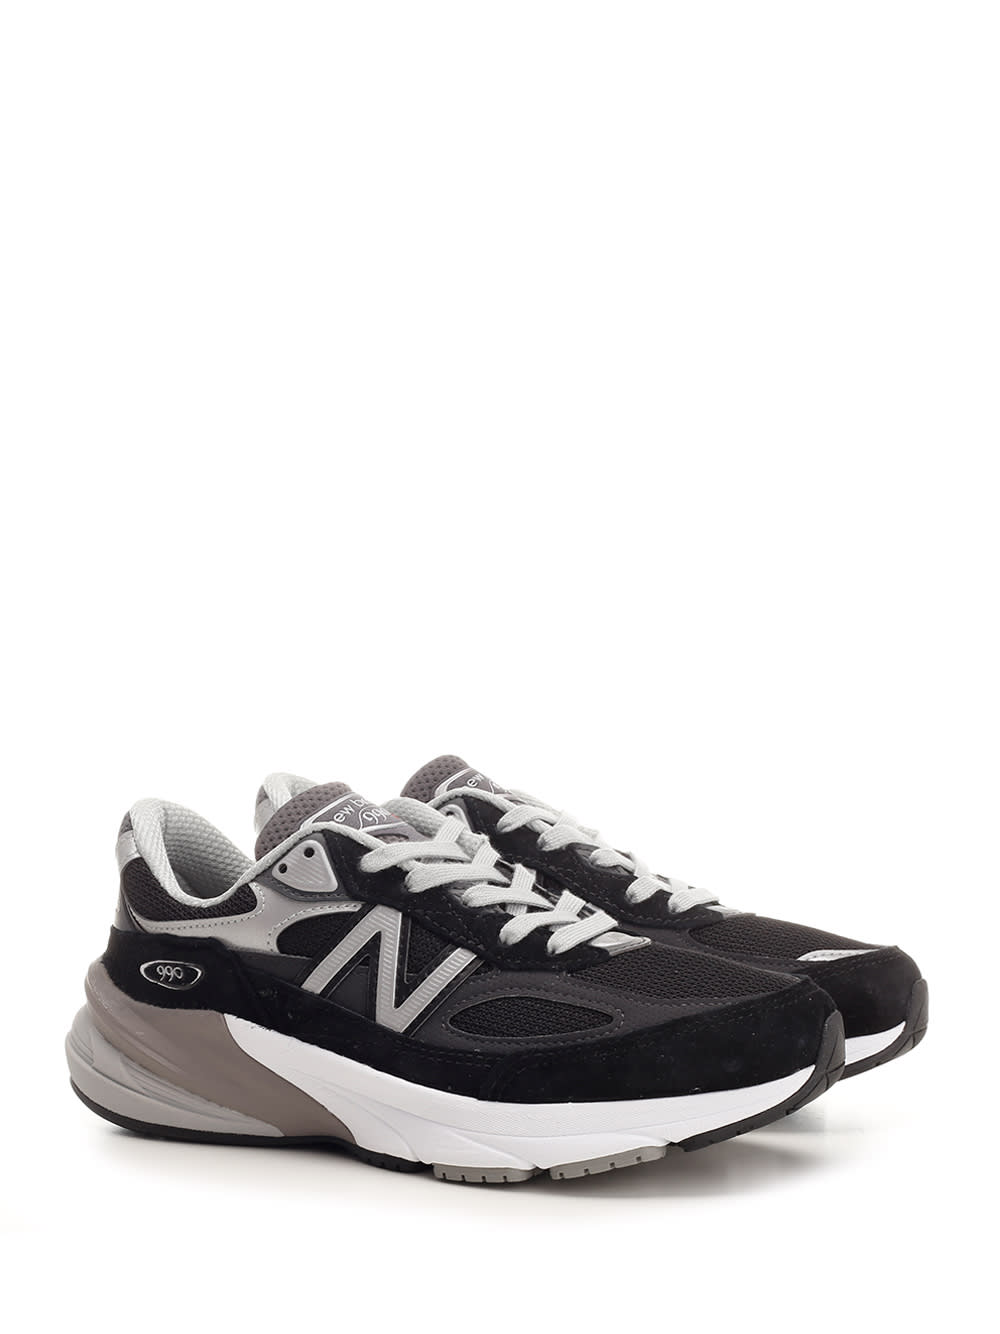 Shop New Balance Black 990 Sneakers